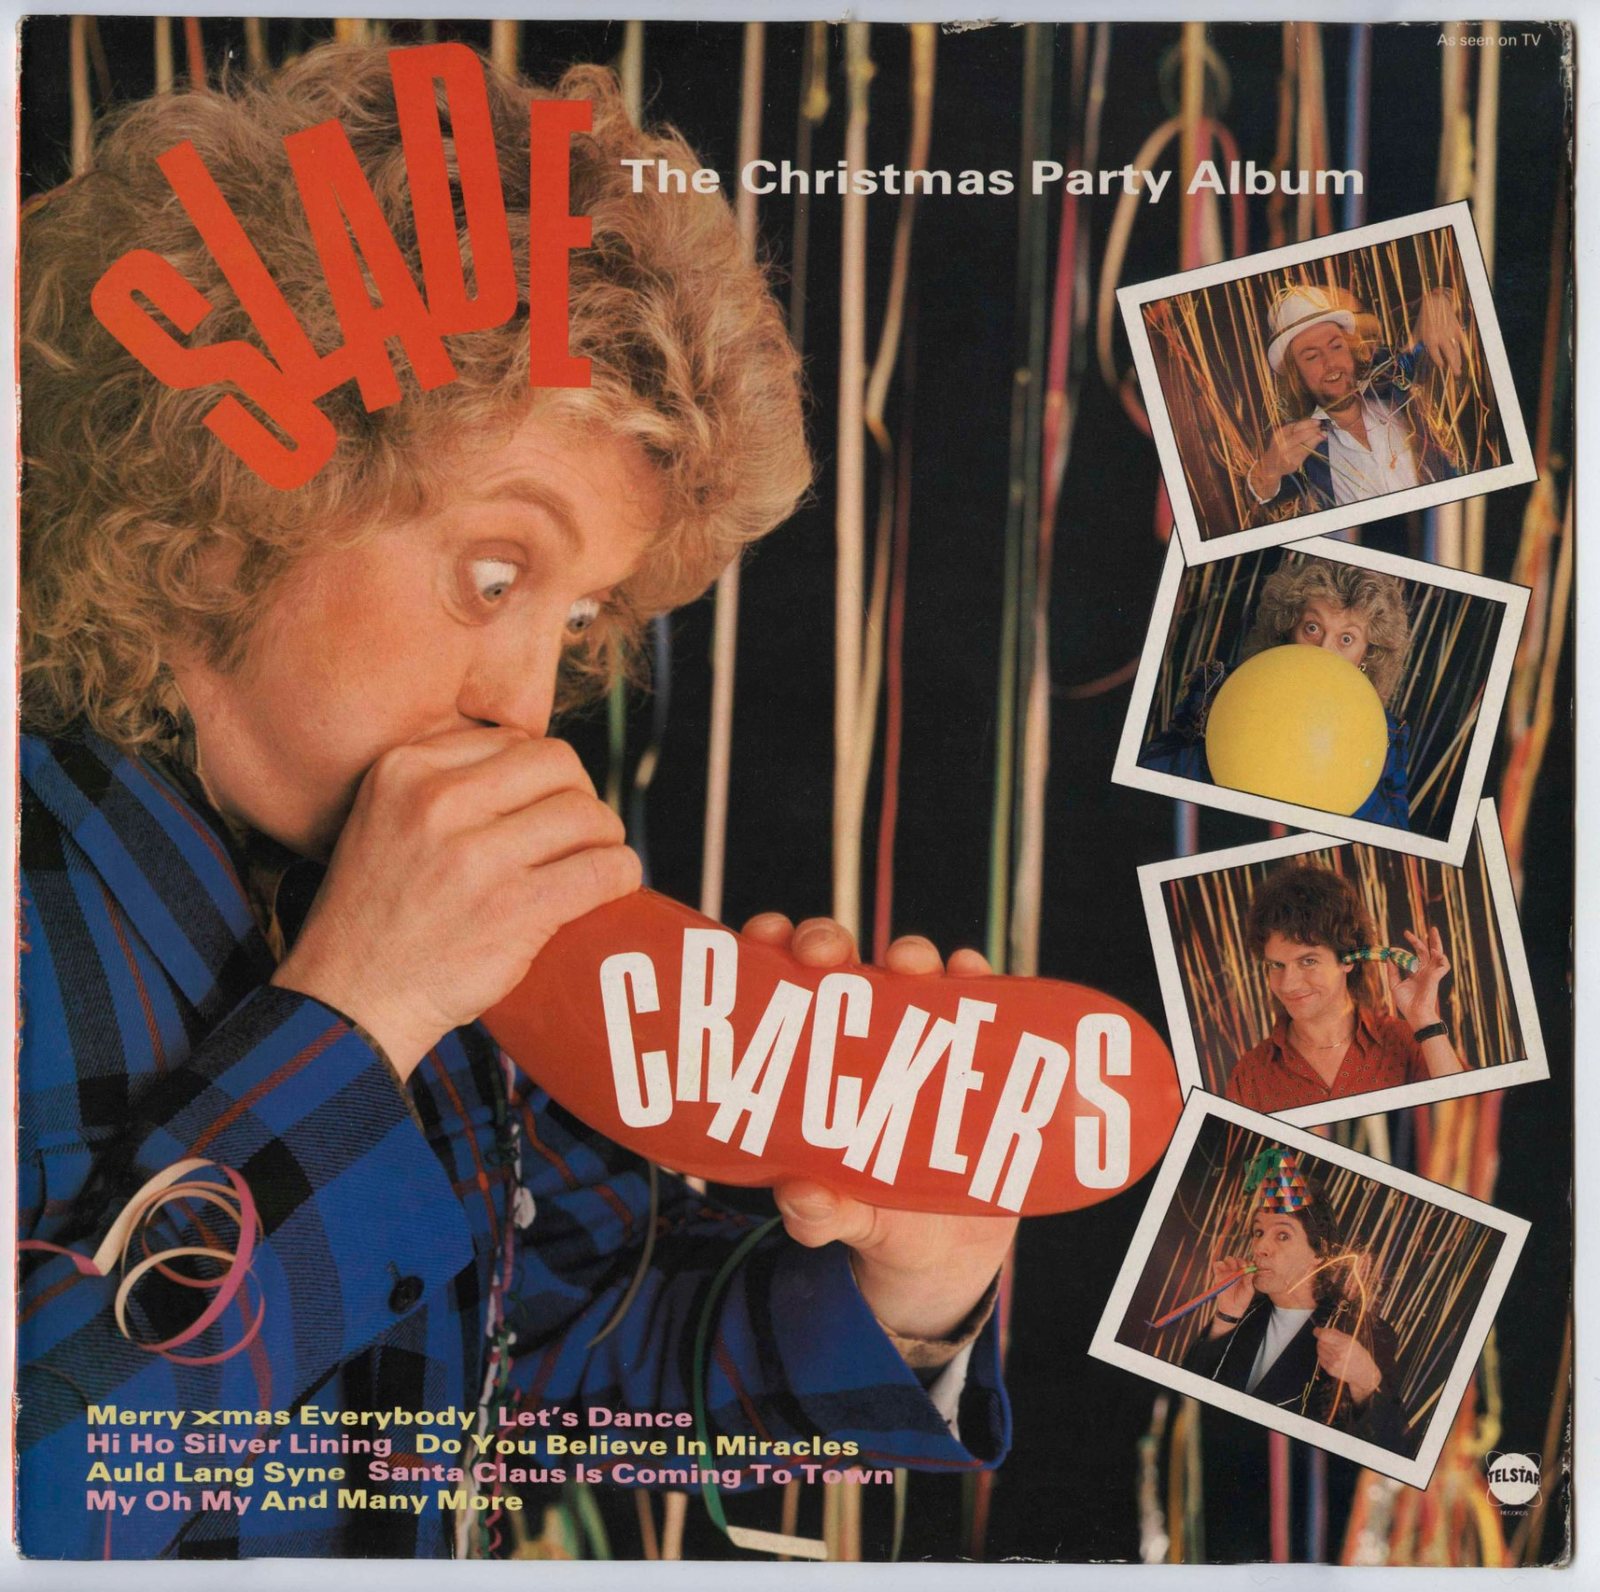 Slade 1985 Crackers (The Christmas Party Album) LP face аааа.jpg